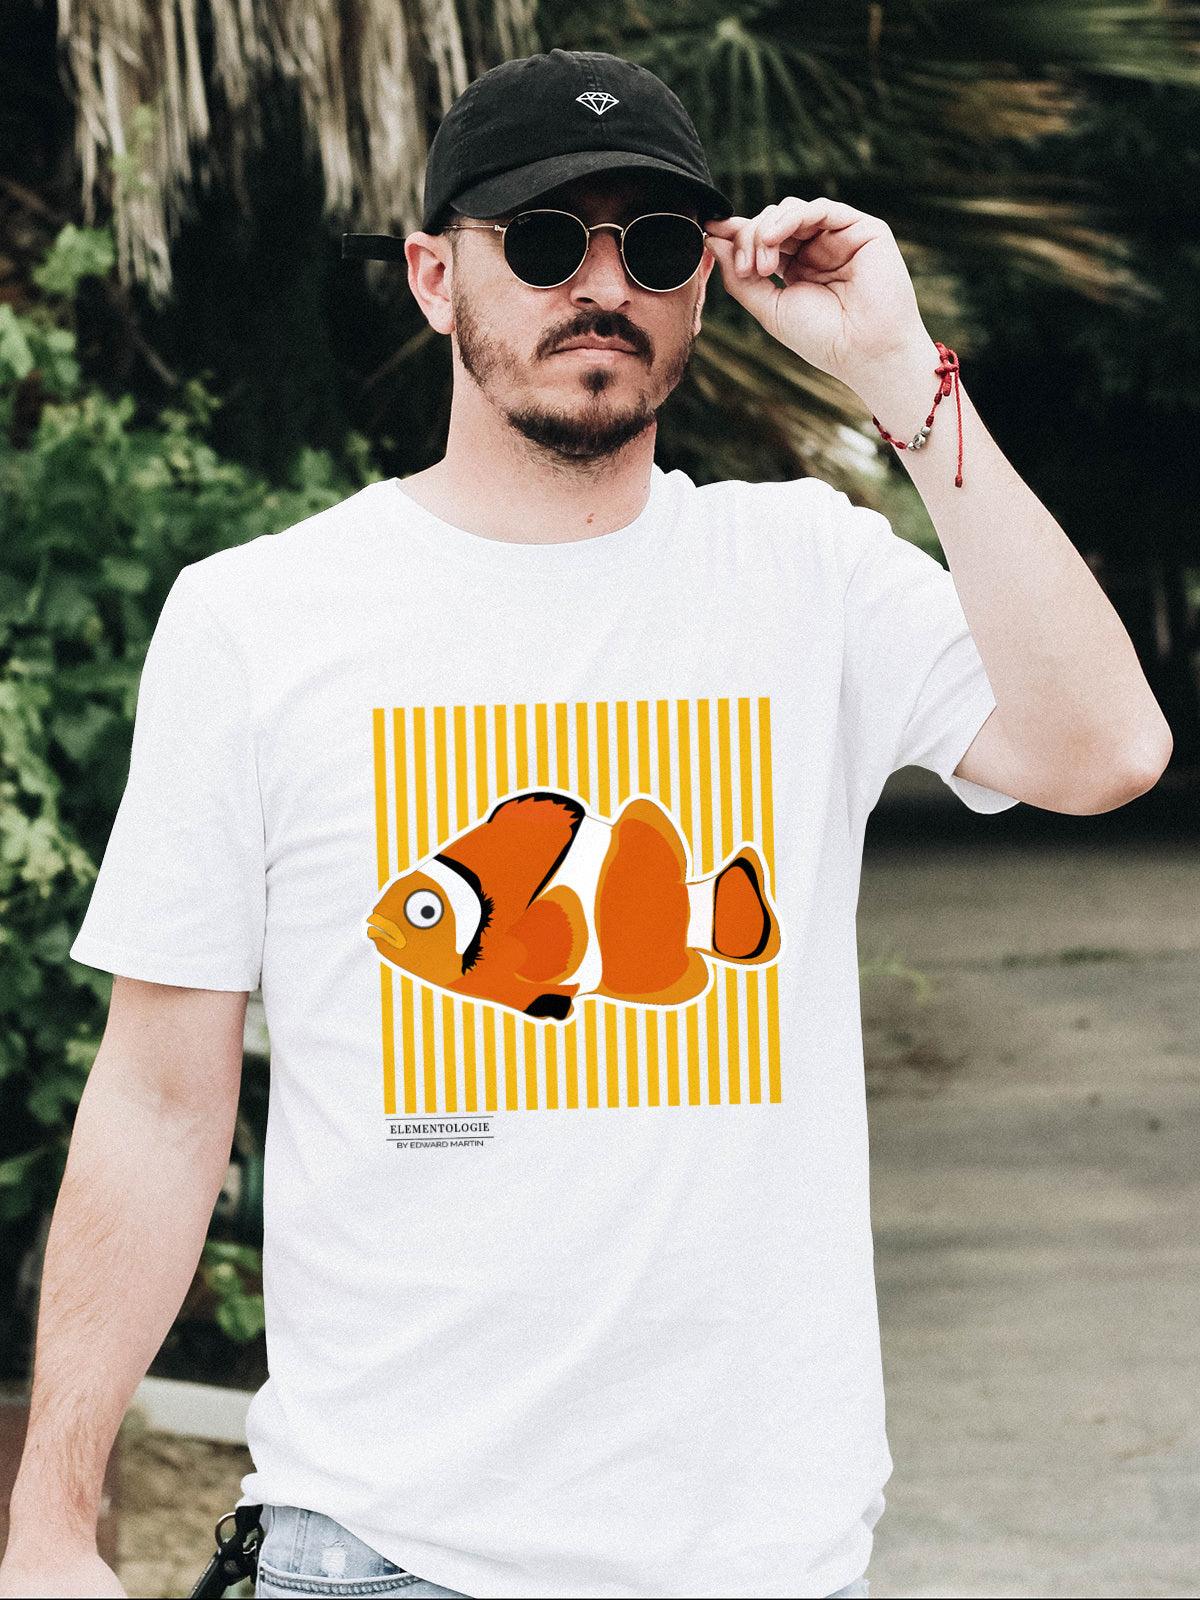 Men's Premium Short Sleeve Tee-Clown Fish - Elementologie